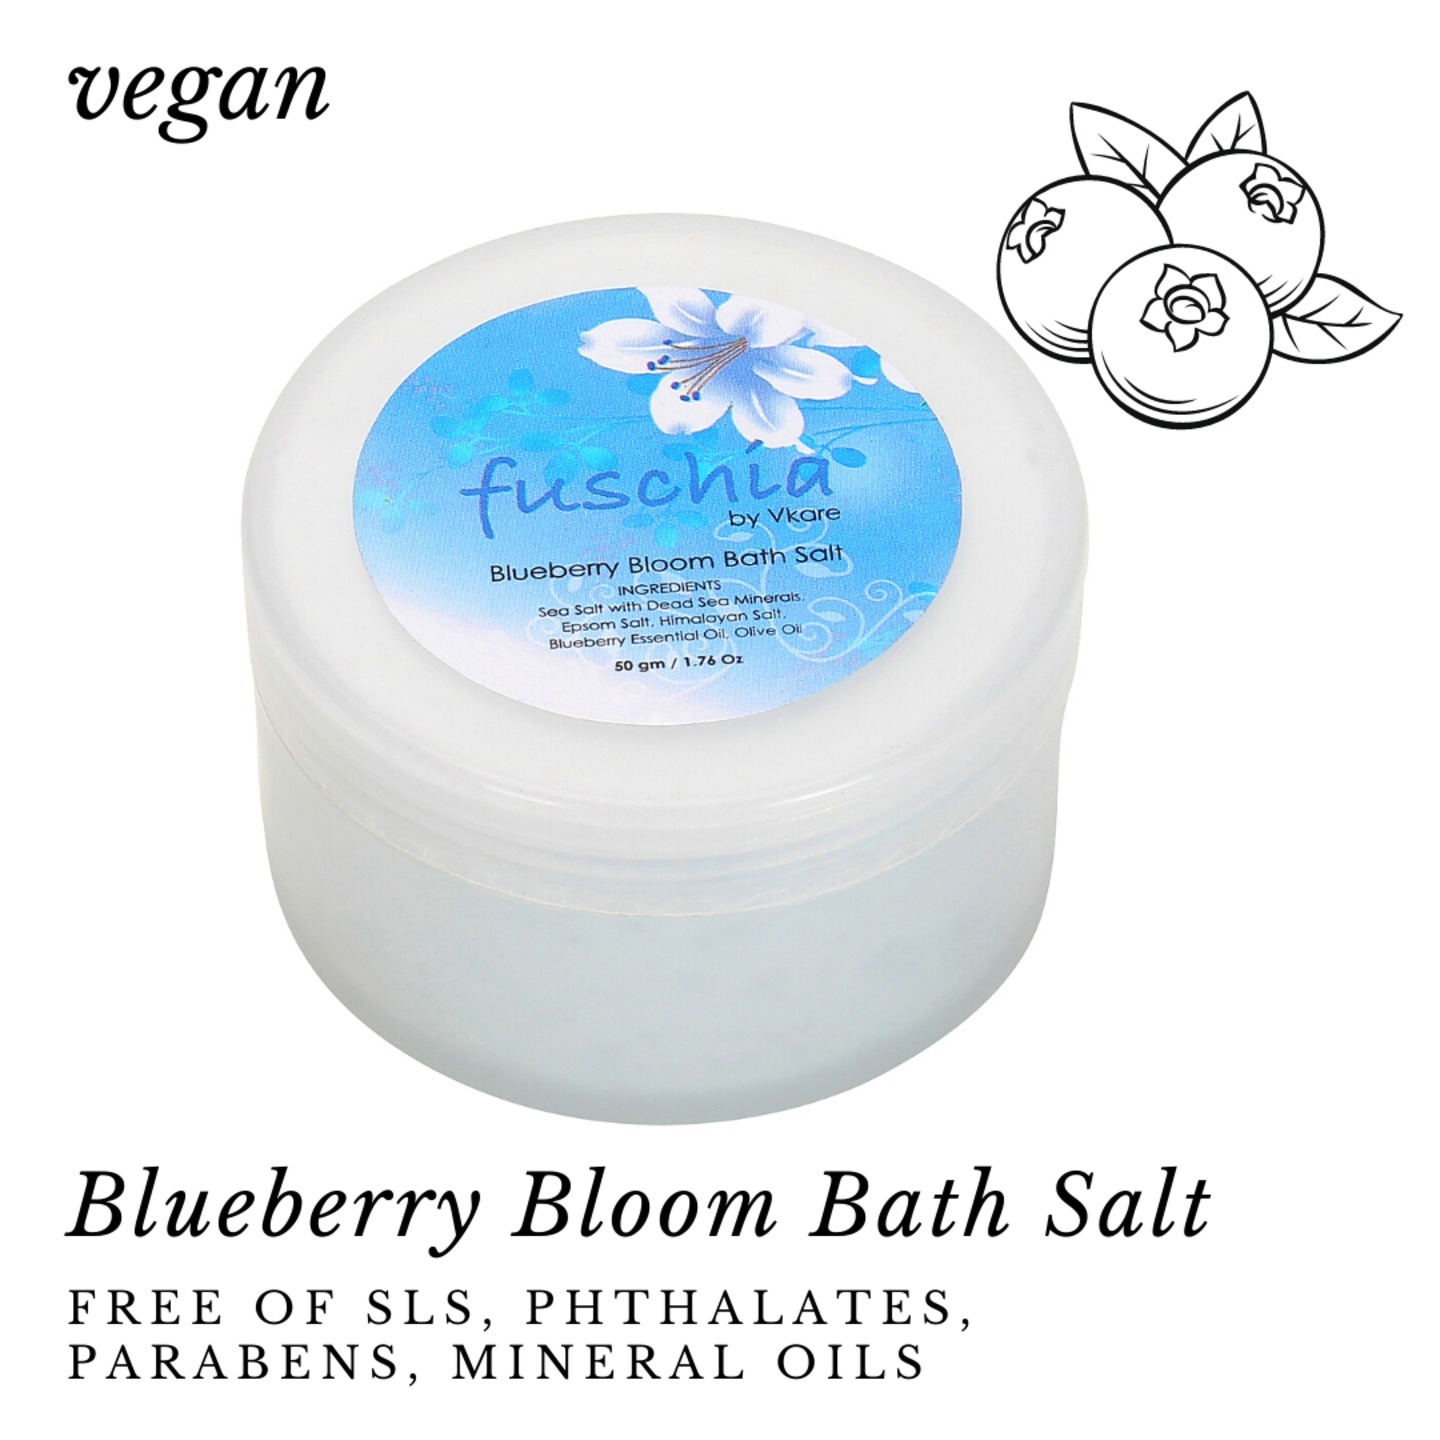 Fuschia - Blueberry Bloom Bath salt - 50gms